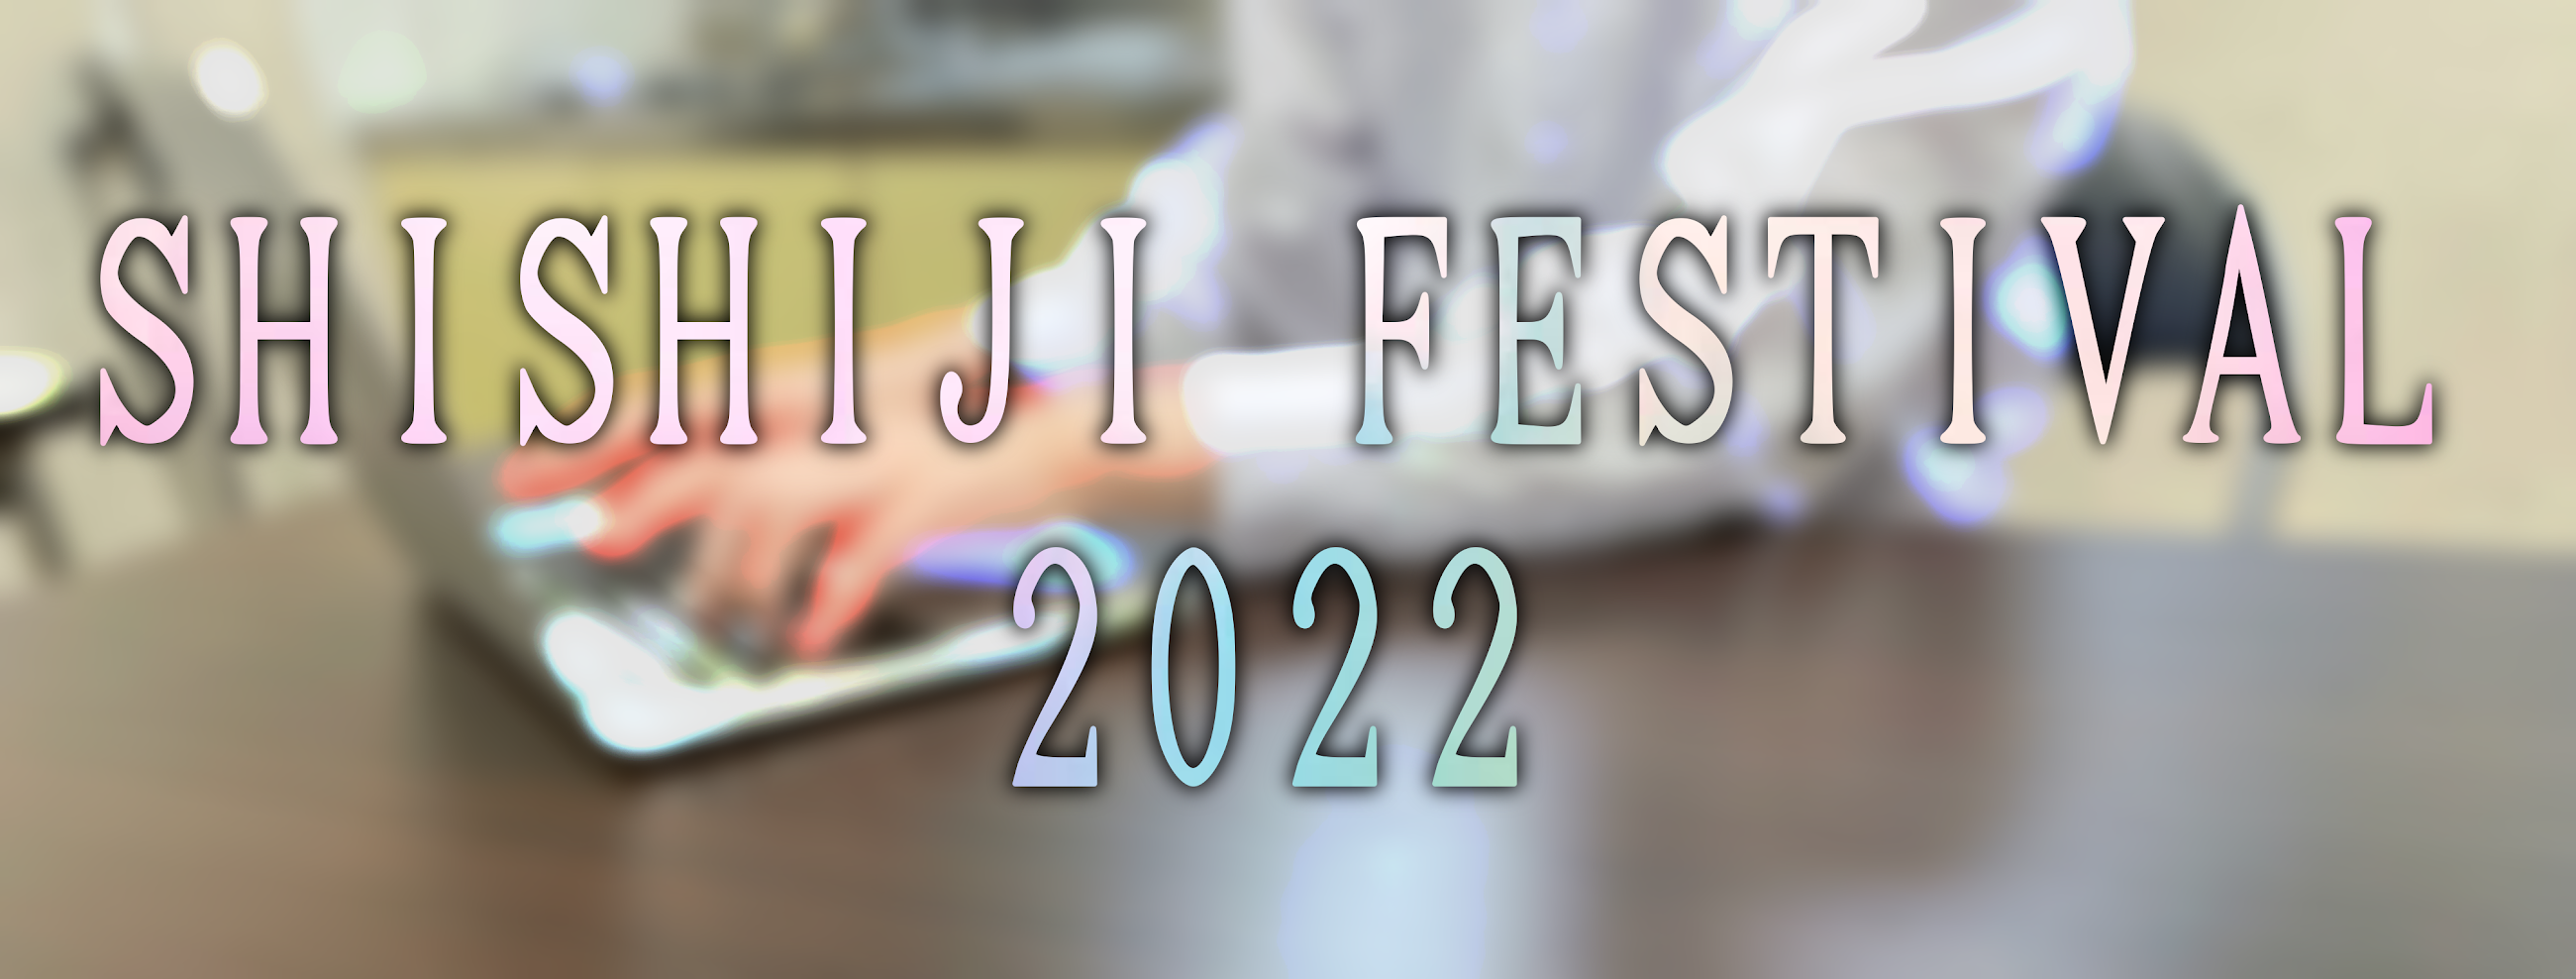 SHISHIJI FESTIVAL 2021